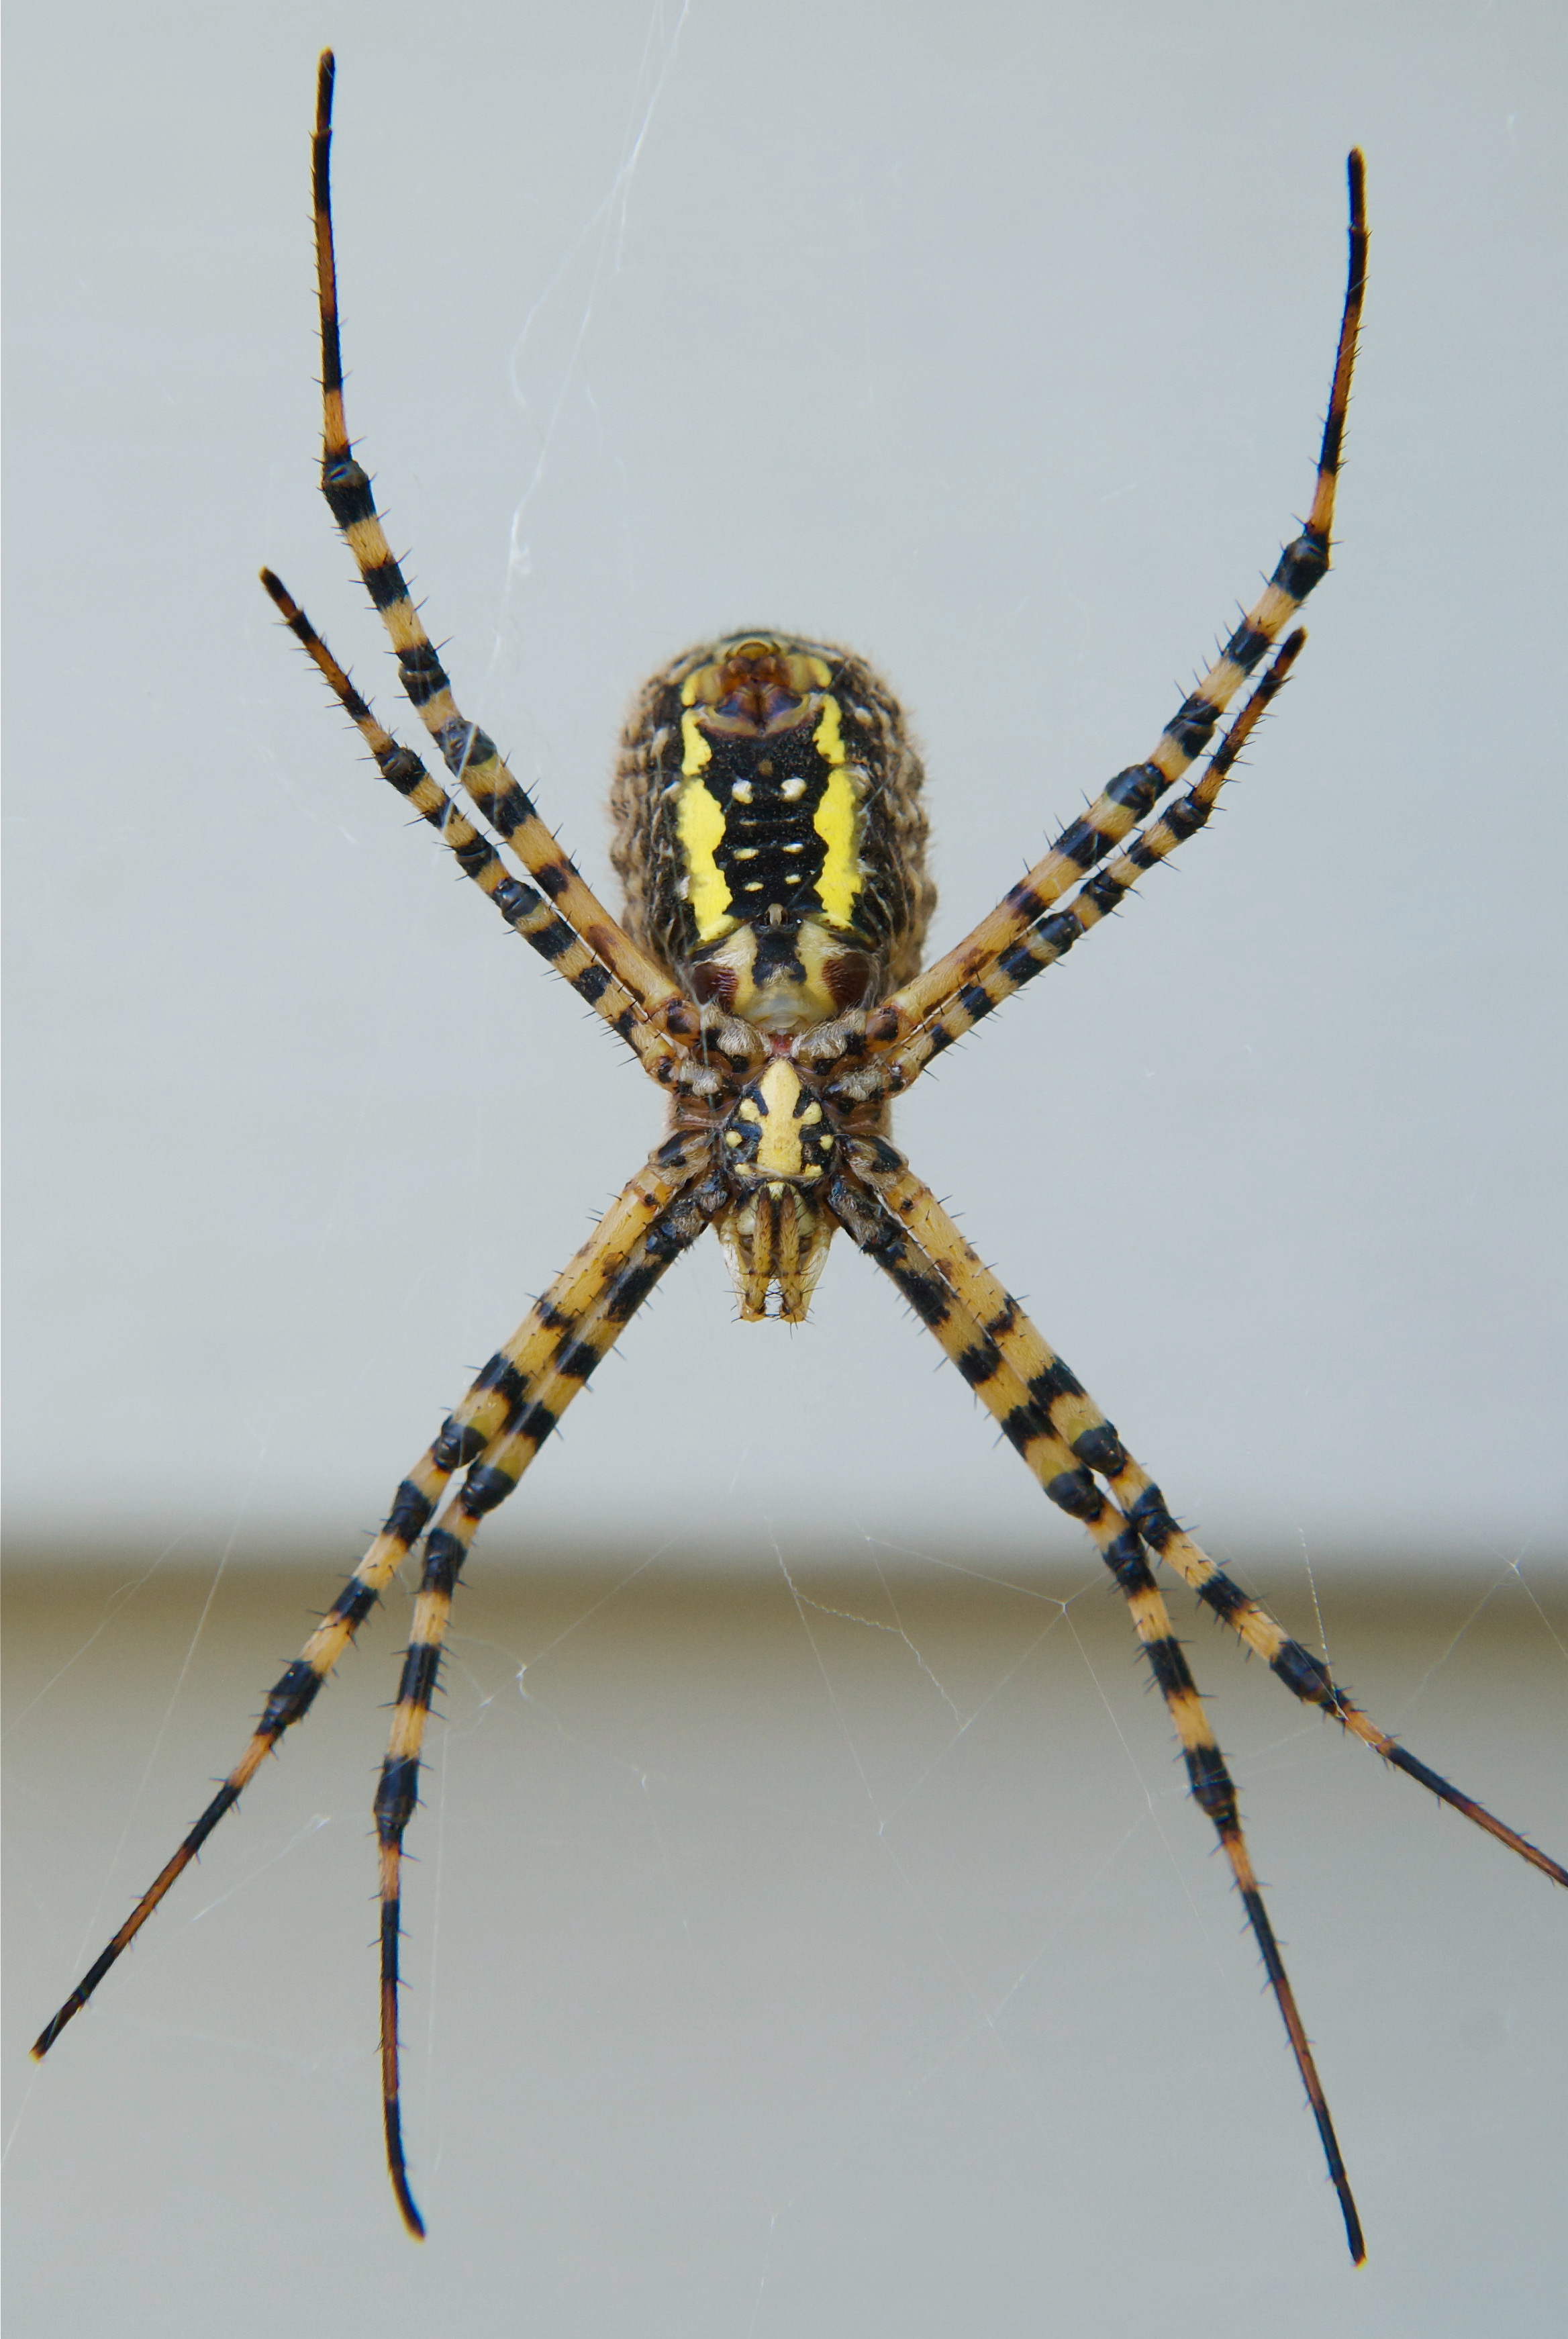 Banded Garden Spider (Argiope trifasciata) - Plants and Animals of Northeast Colorado2336 x 3484